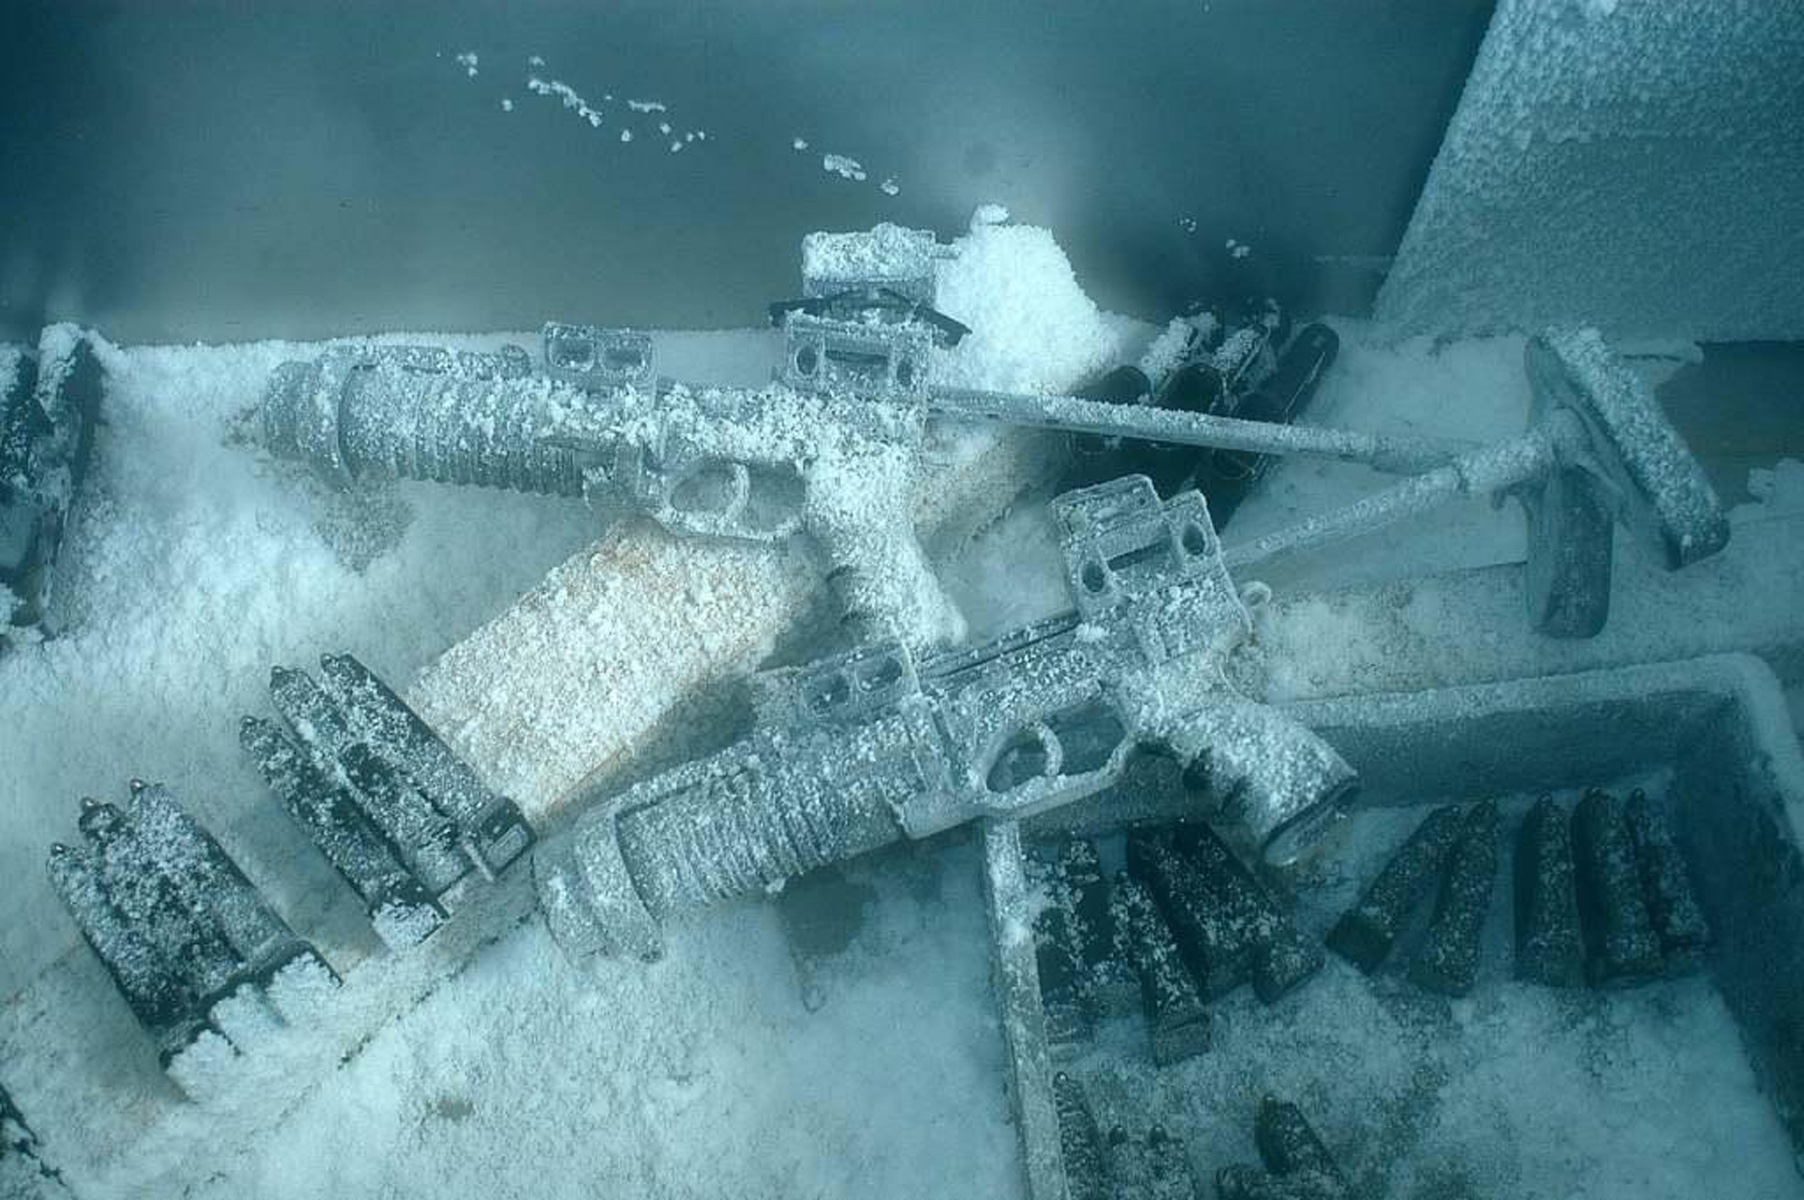 Military weapons frozen in sub-zero temperatures. 